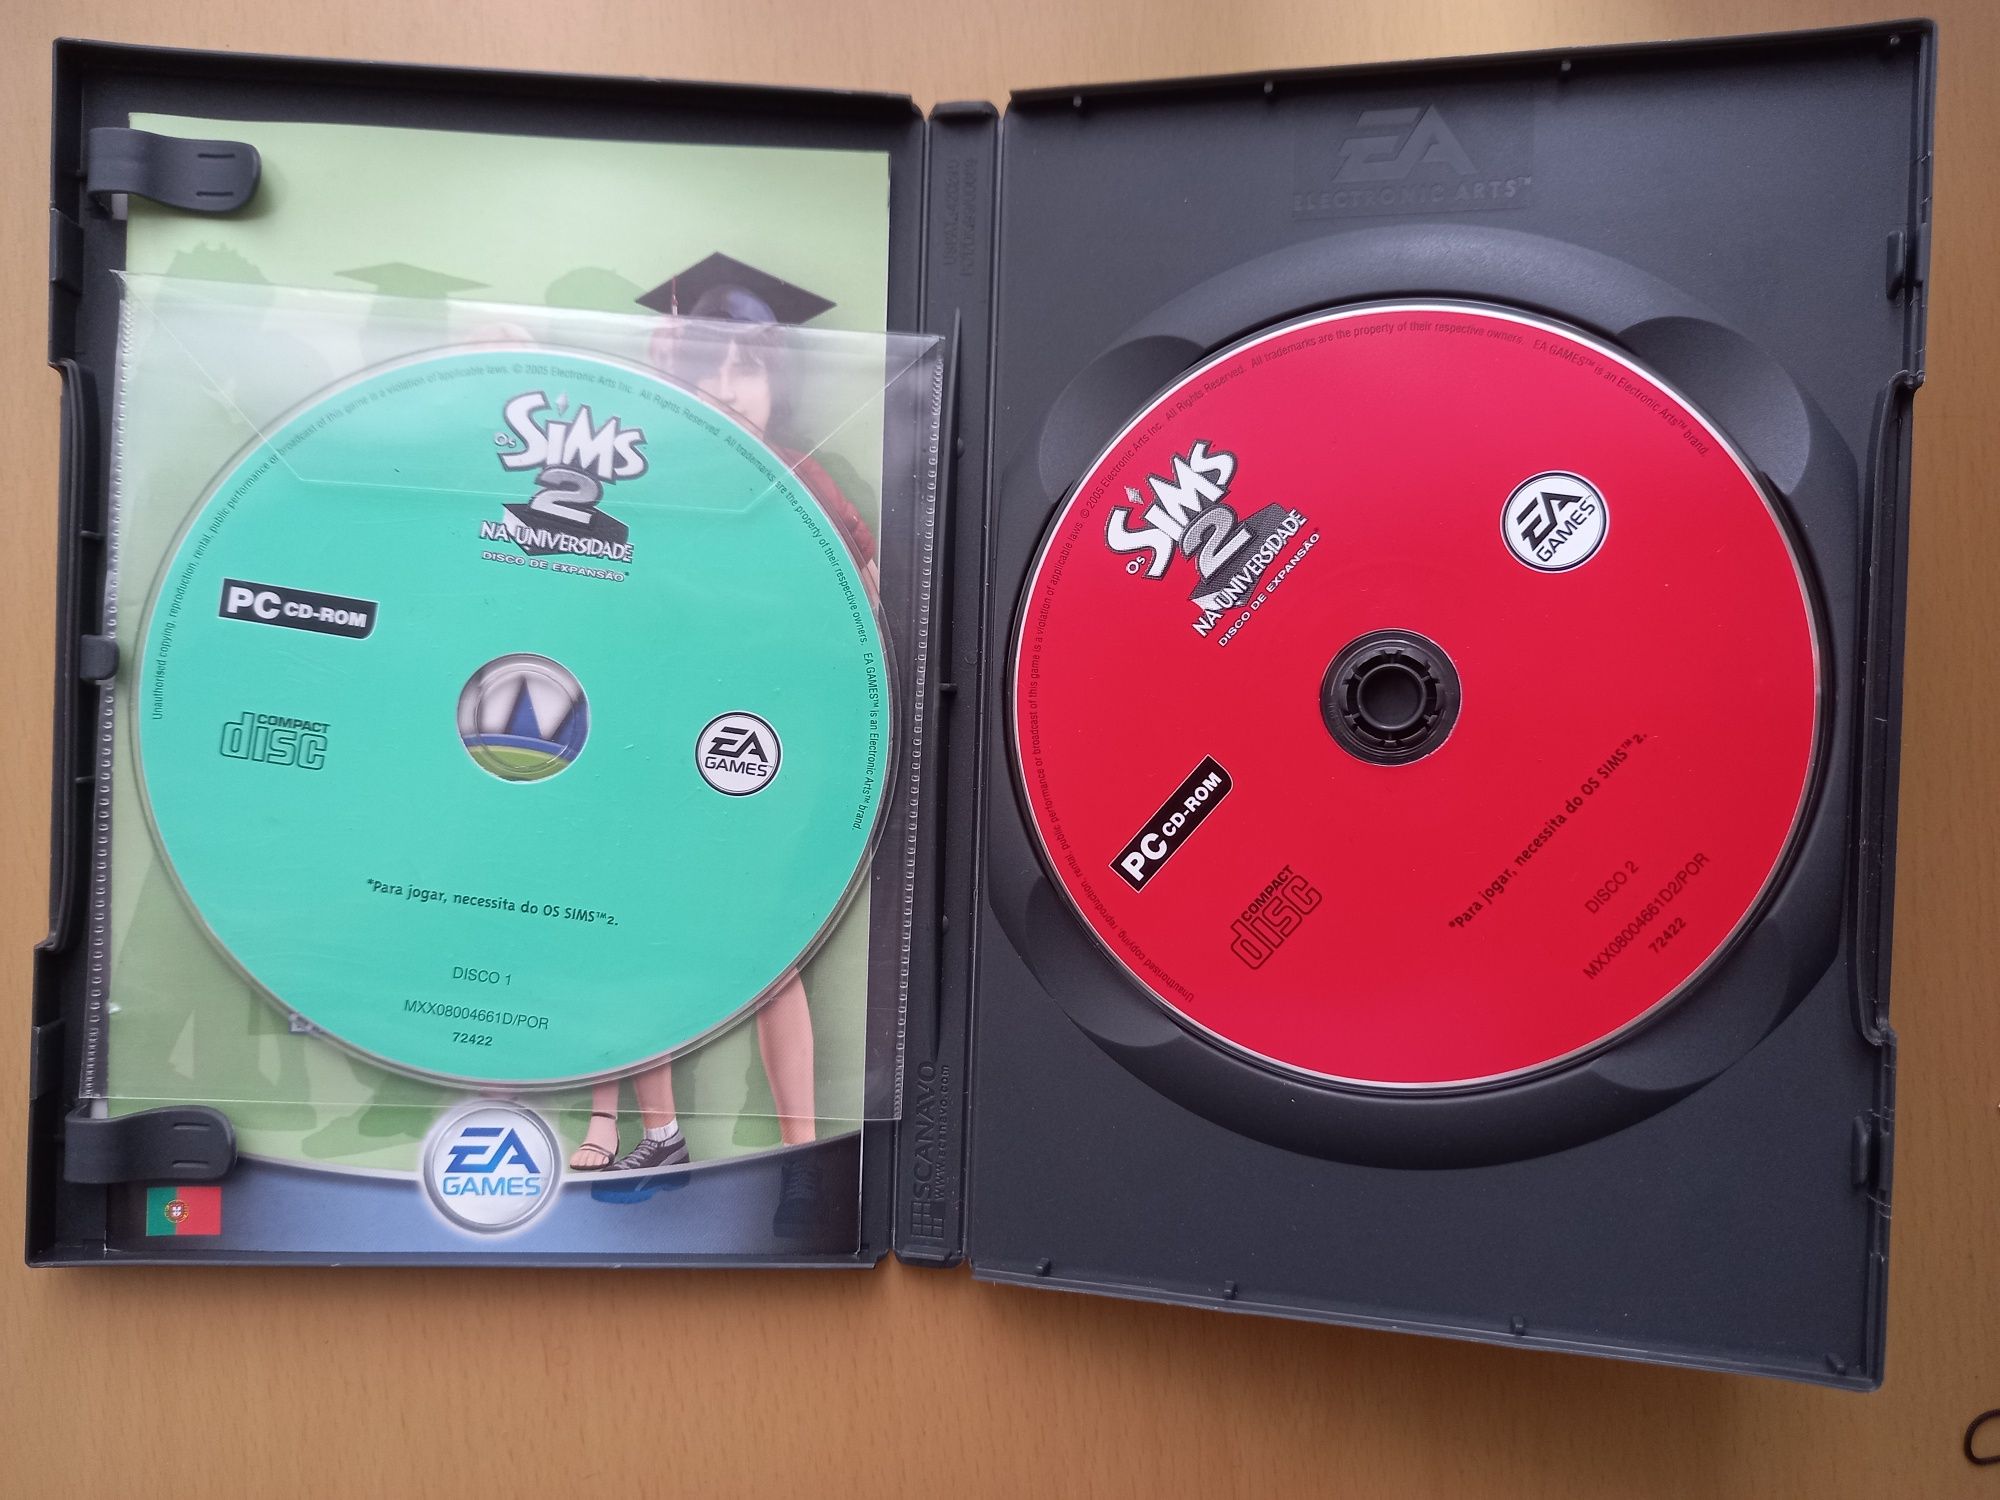 Jogos PC: Tomb Raider, Angel of darkness e Sims 2 expansão univ